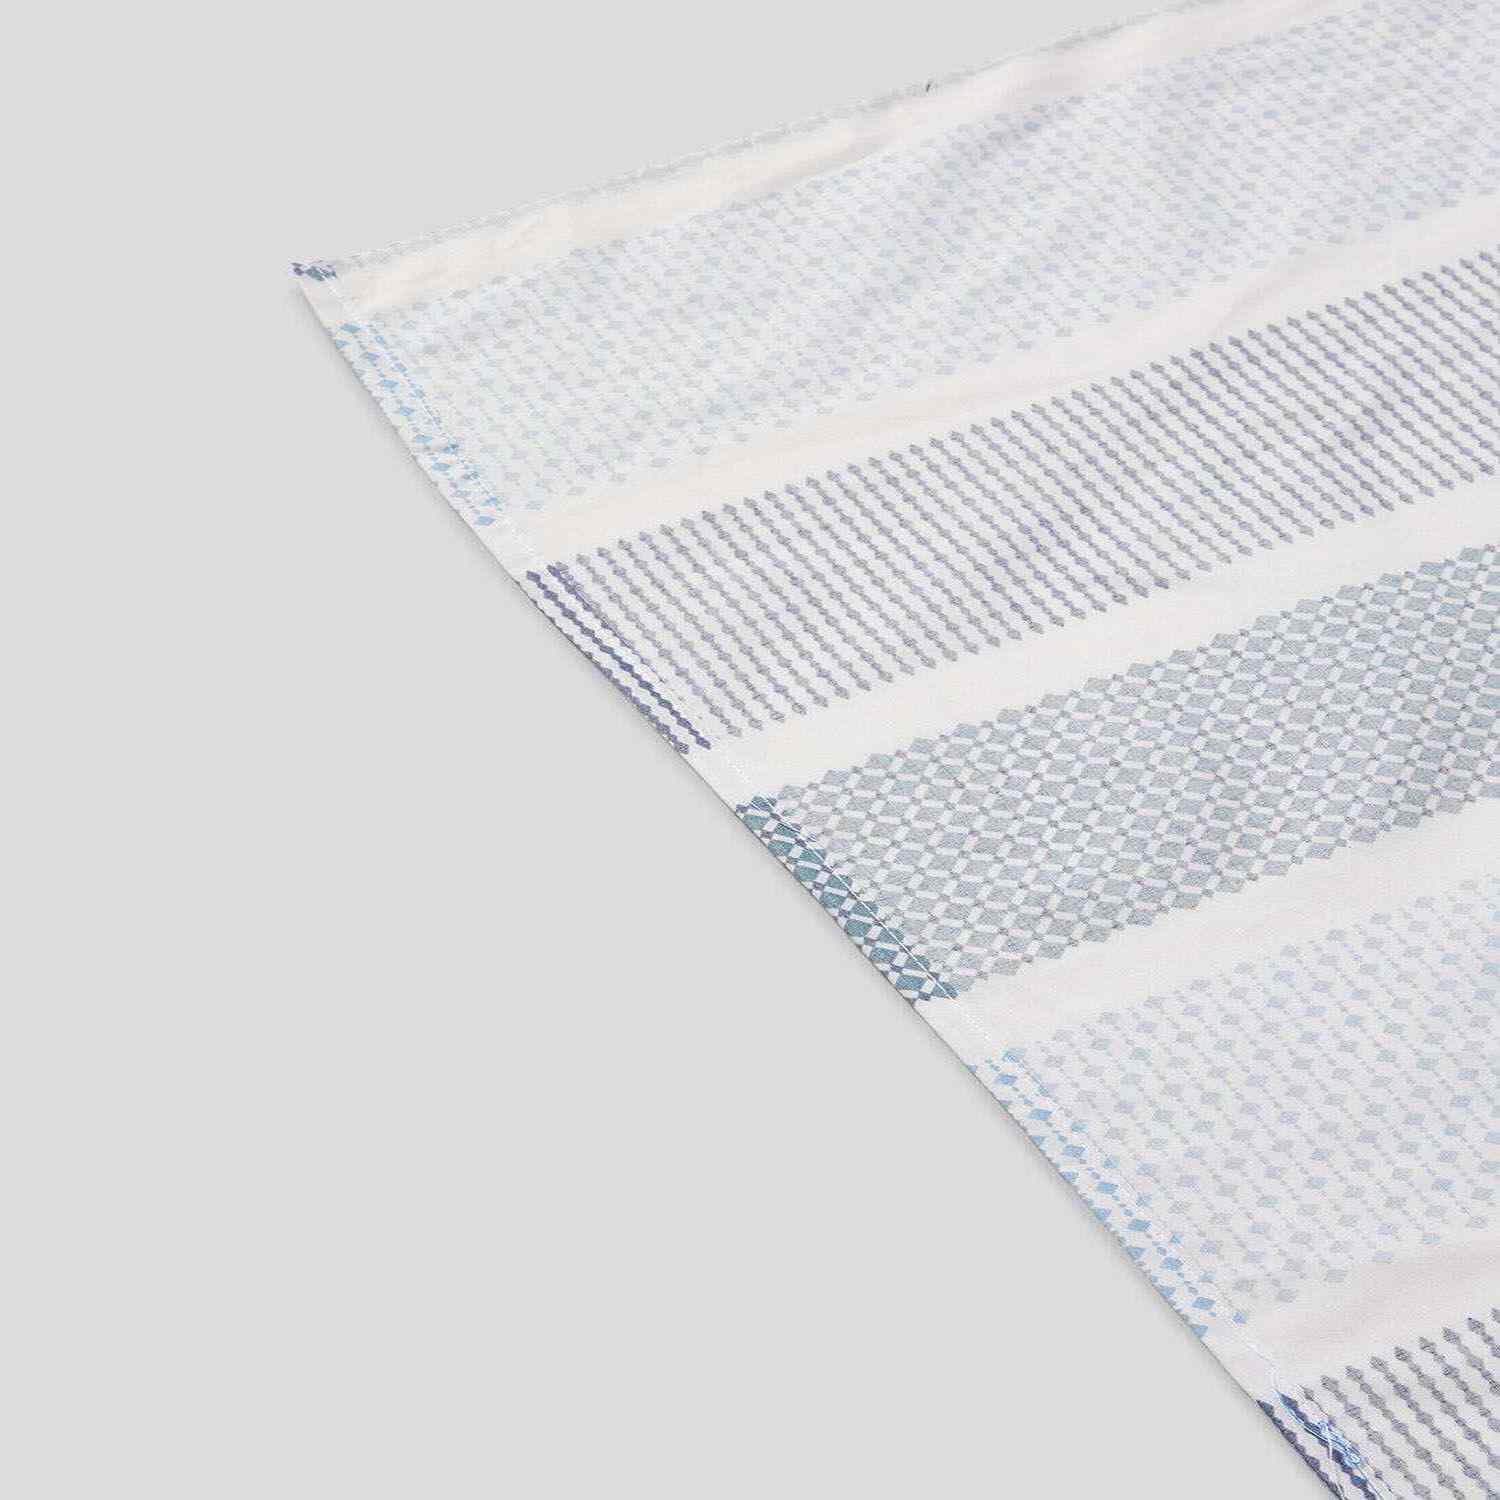 Rishahome 3-Piece Printed 180 Tc Cotton Bedsheet Set Queen Size, Premium Collection (1 Bedsheet + 2 Pillow Cases) Gray Suit